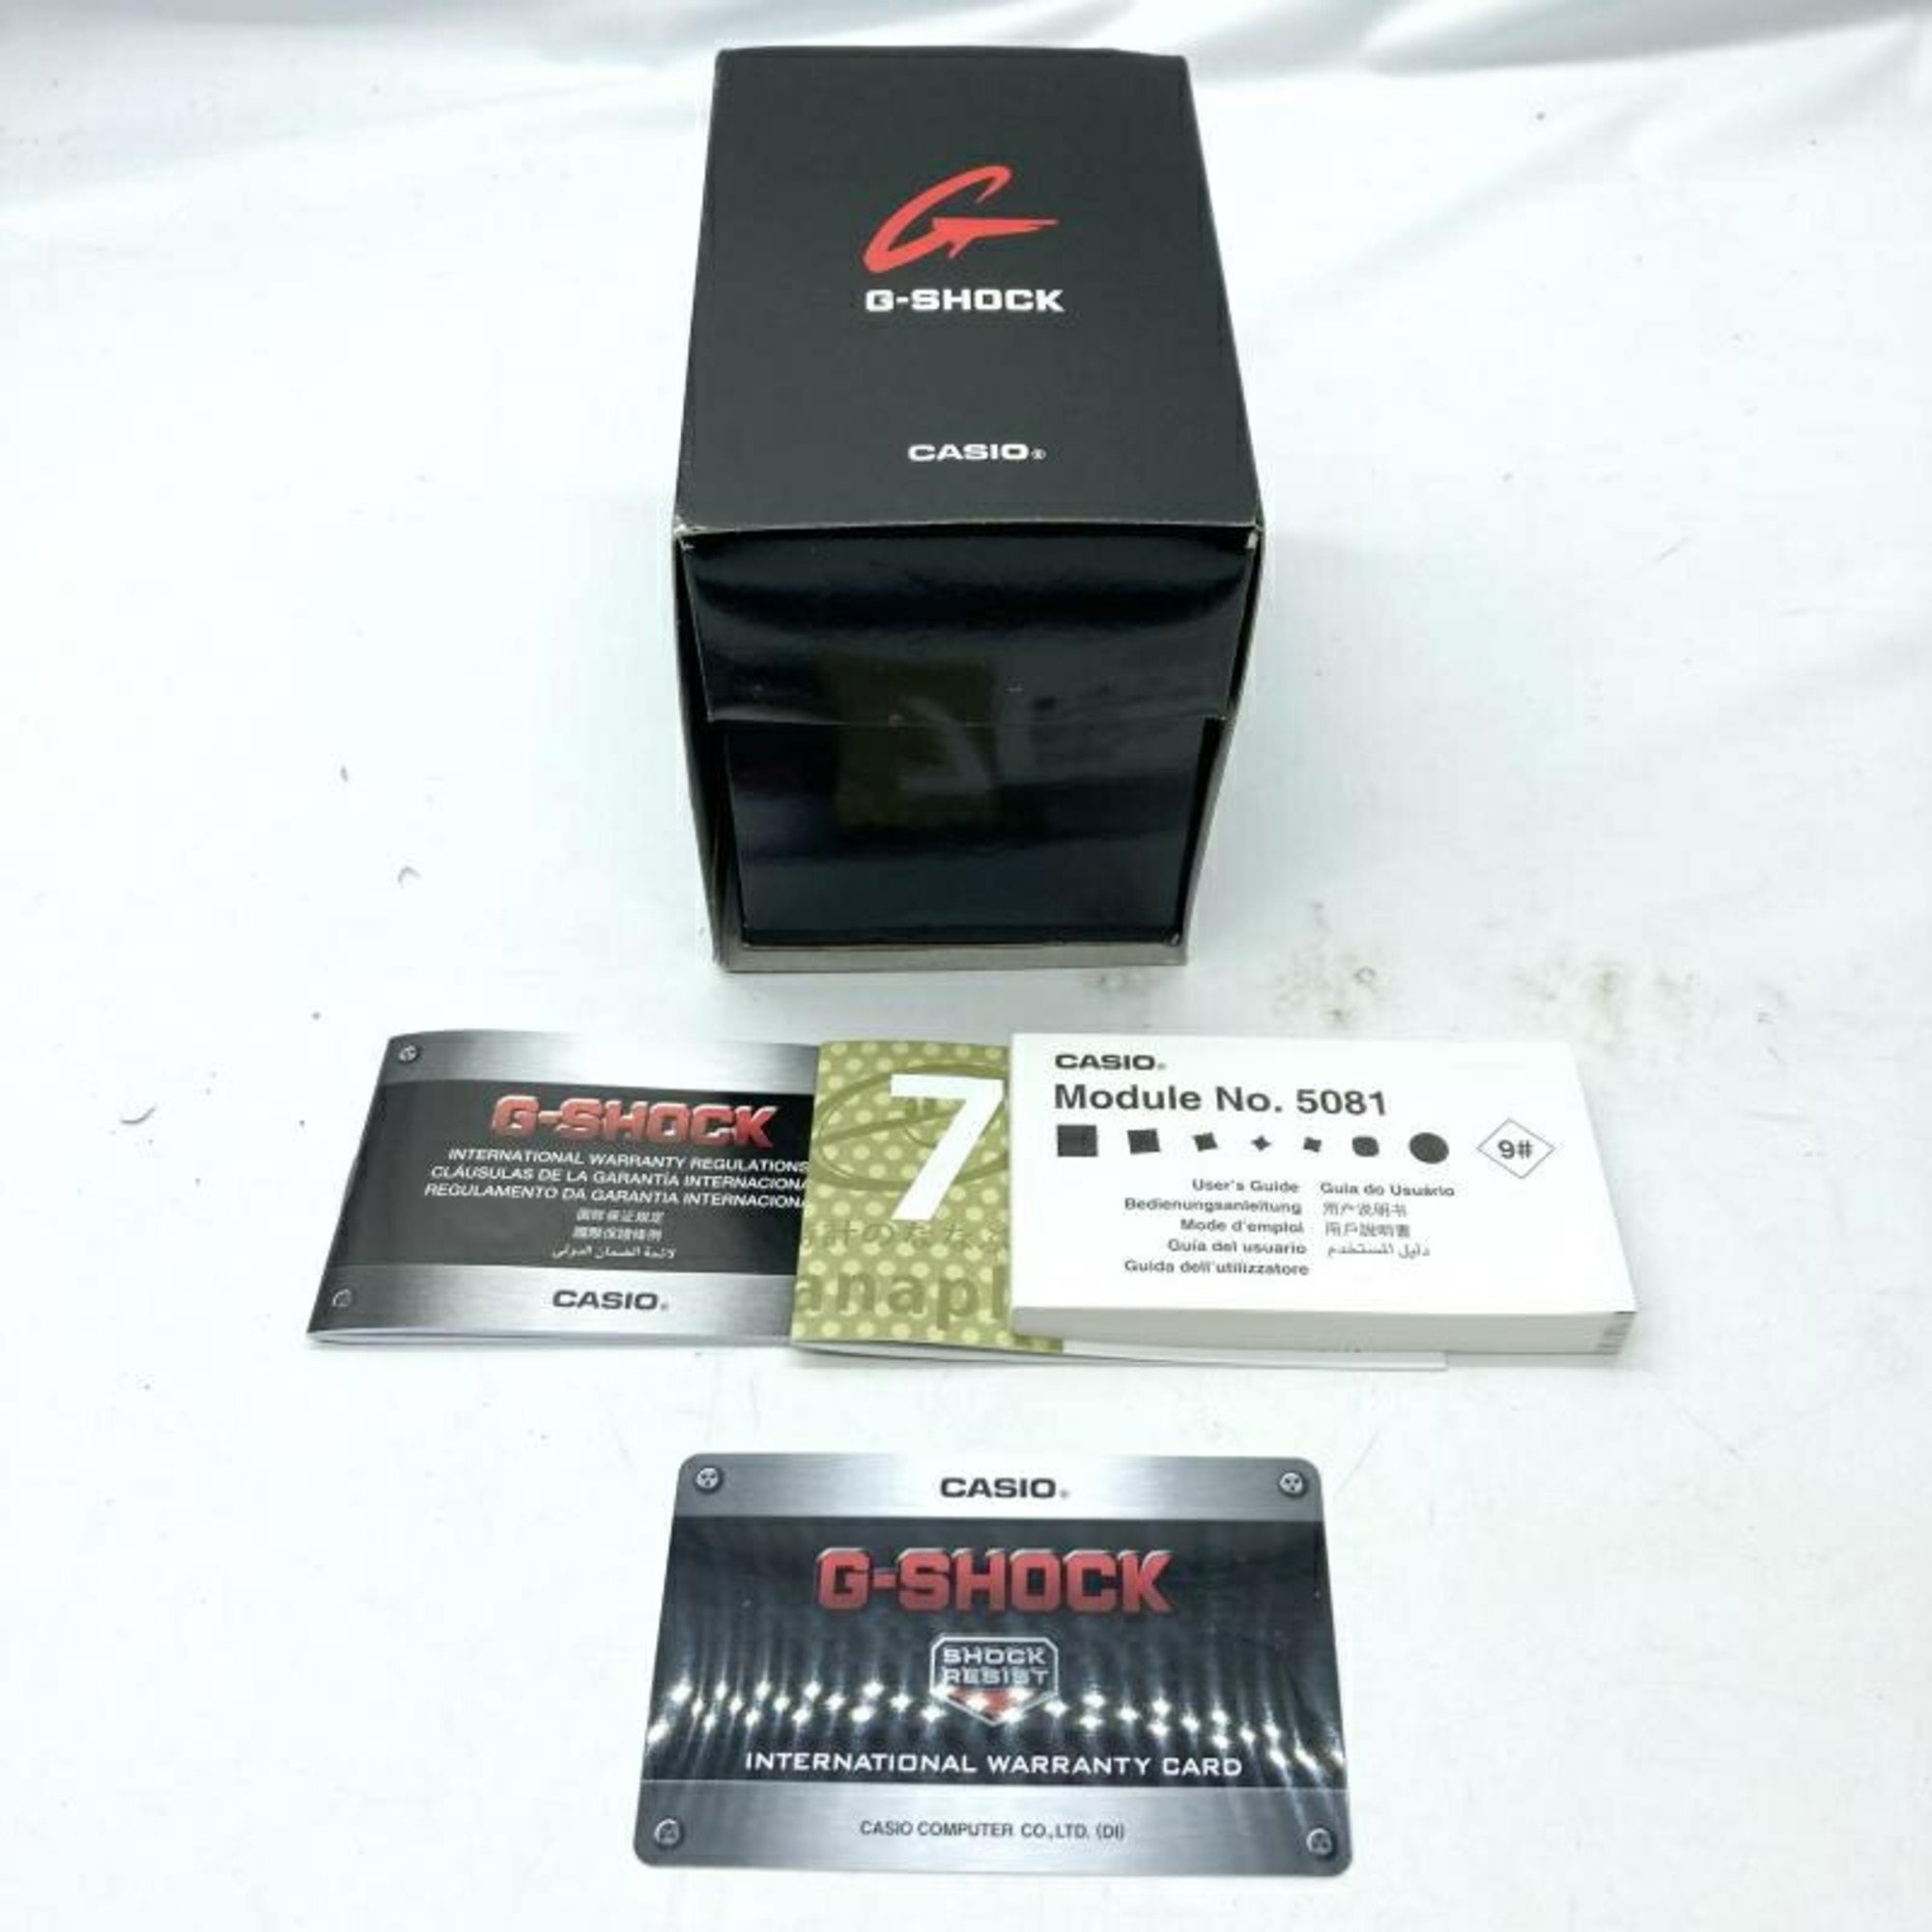 CASIO G-SHOCK GA-100-1 Casio G-Shock Watch Ana-Digi Black Red